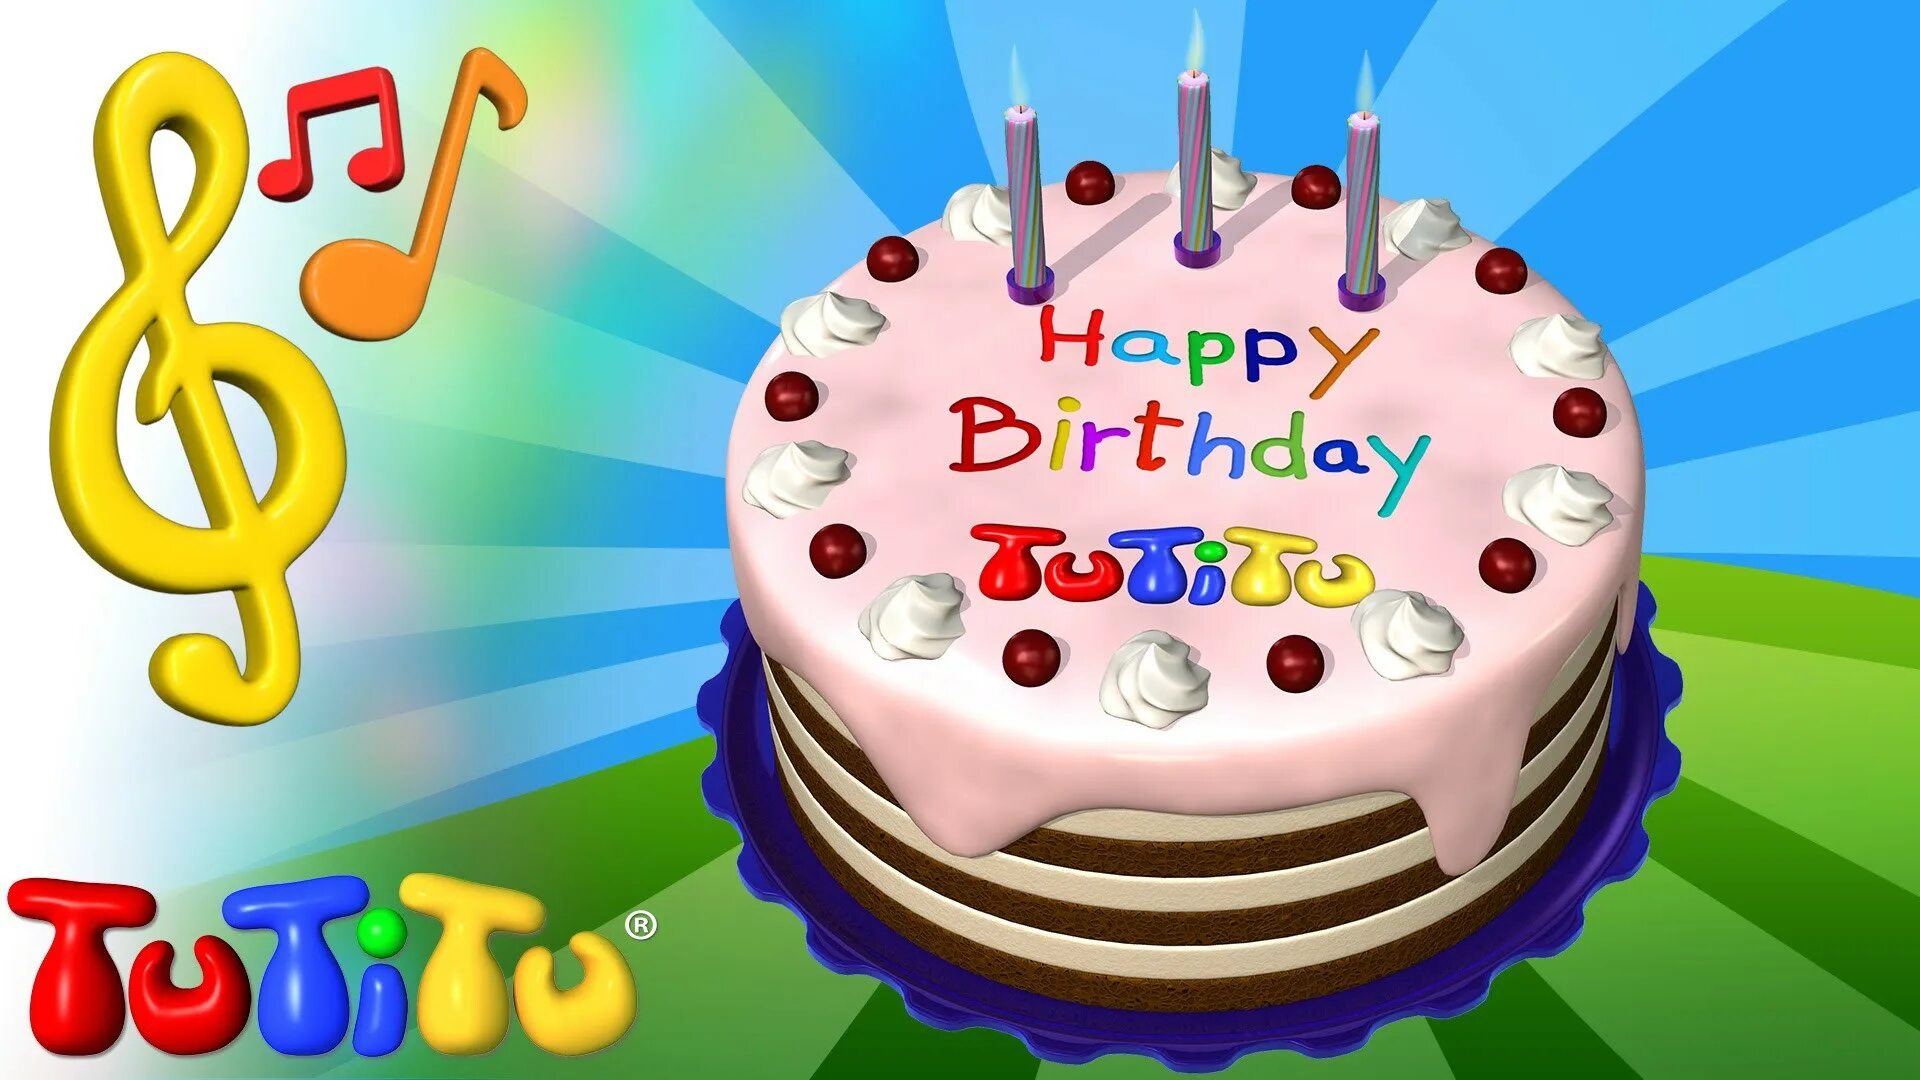 TUTITU торт ко Дню рождения. Happy Birthday for Kids. Birthday Song for Kids. Happy Birthday Song. 40 лет день рождения песня